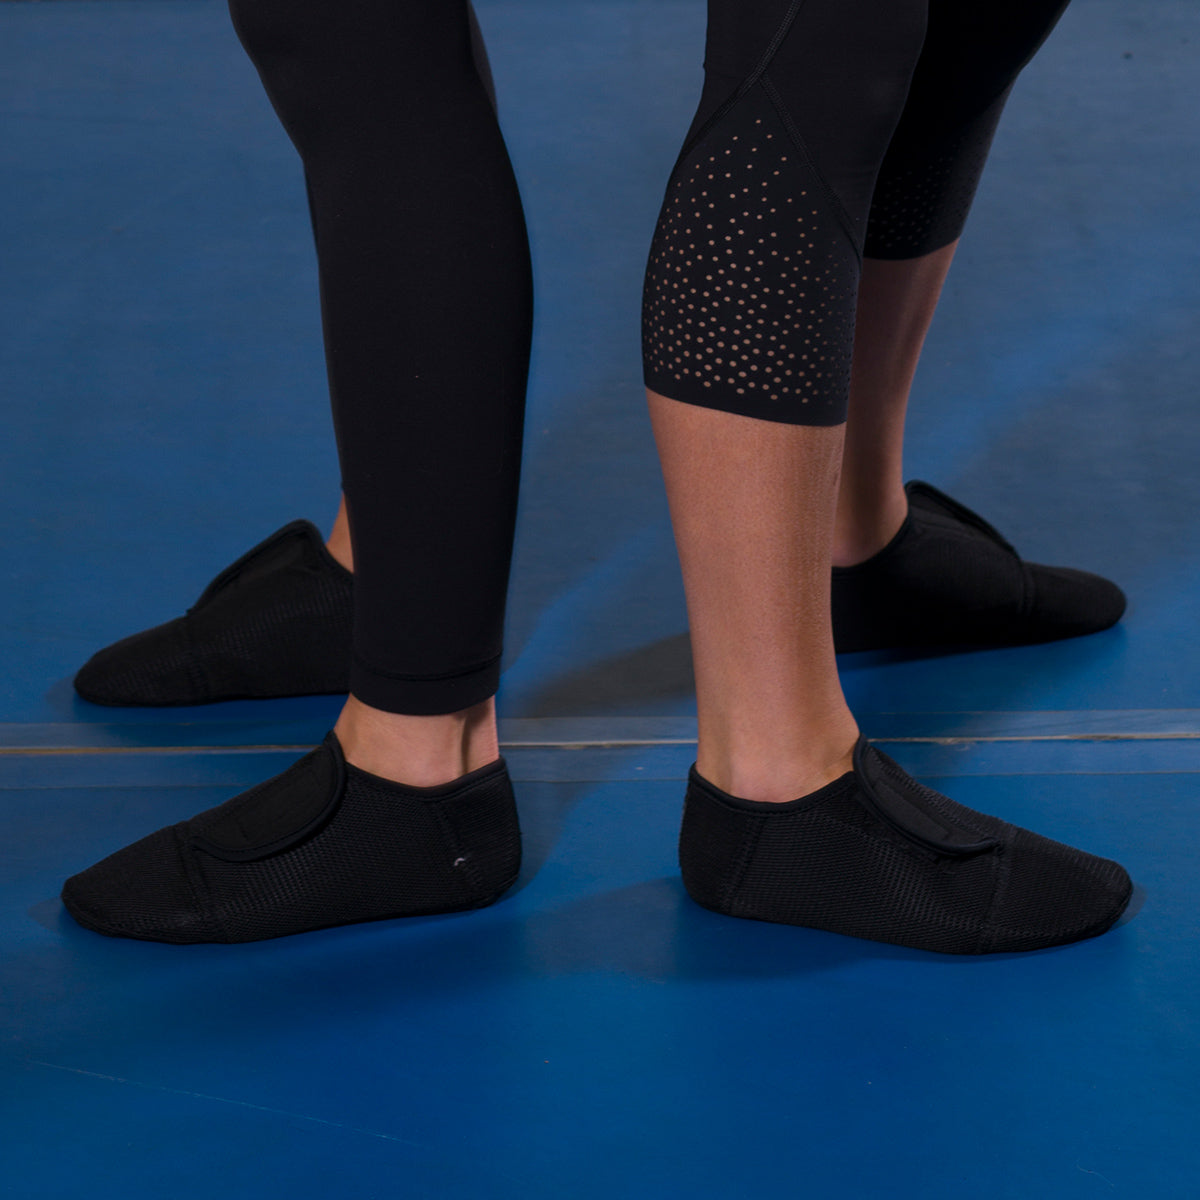 Martial Arts School Tatami Mat Training Socks - Black/Black